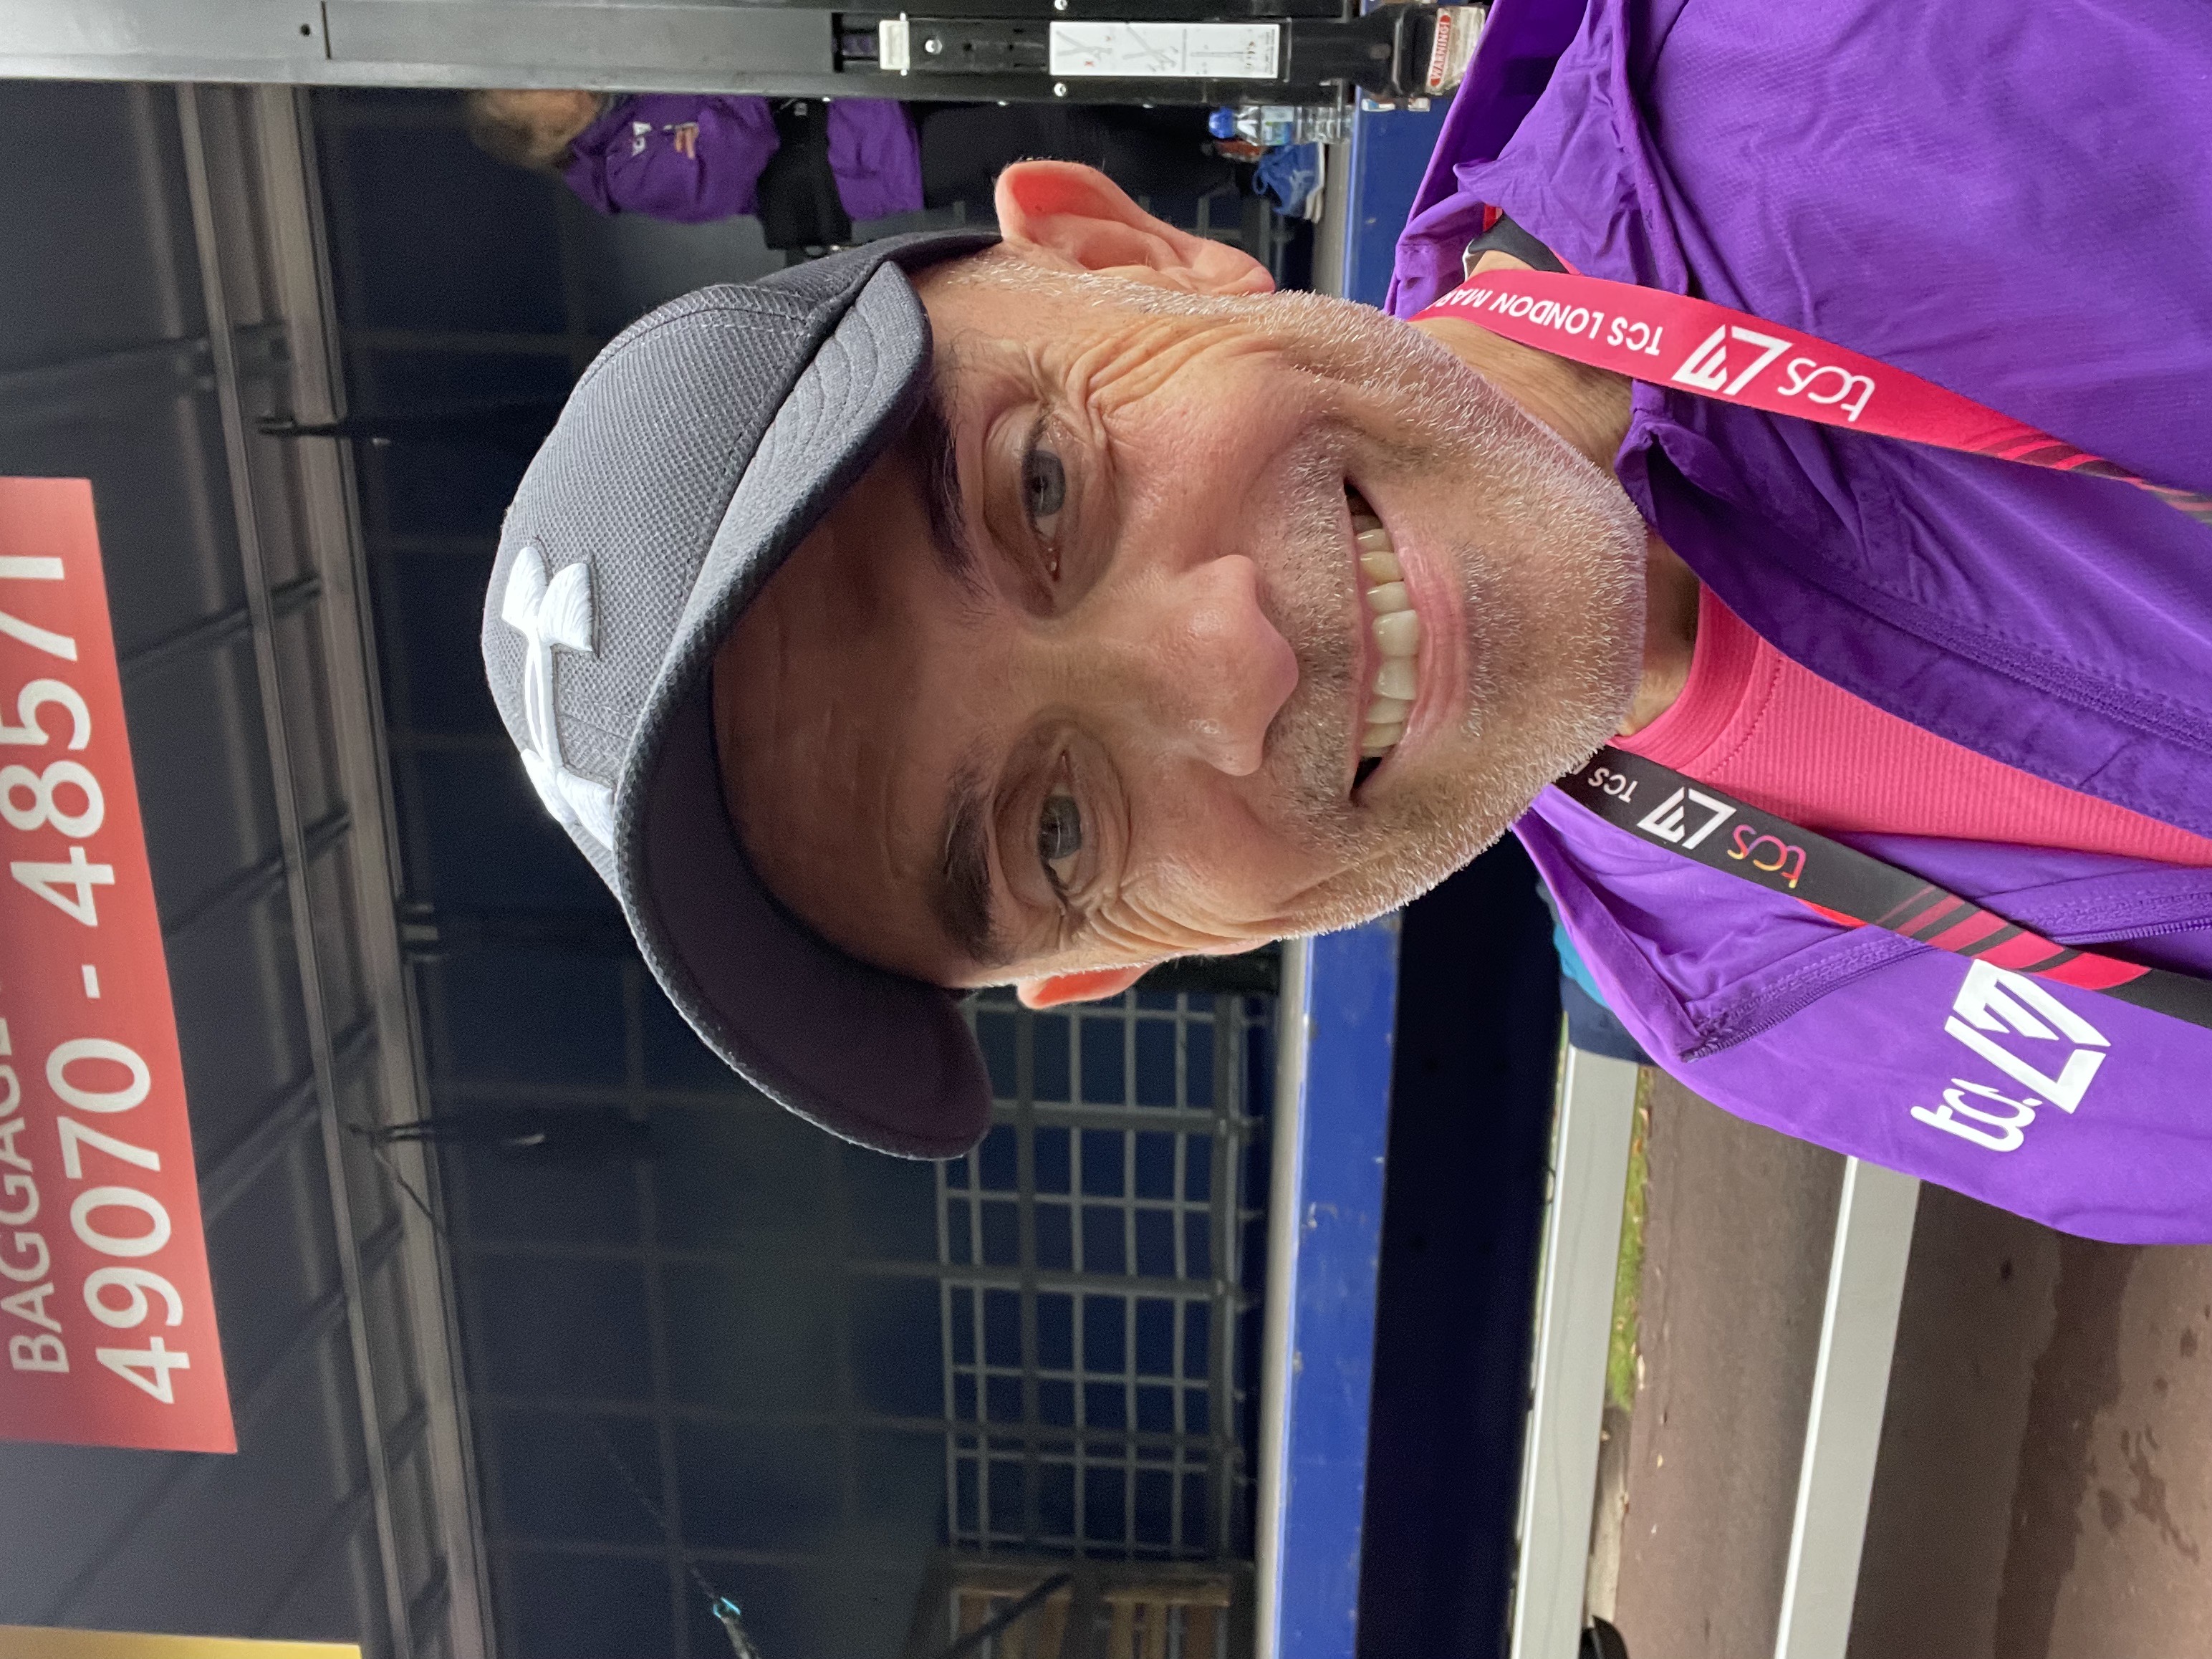 Chris the osteopath volunteering at the London Marathon